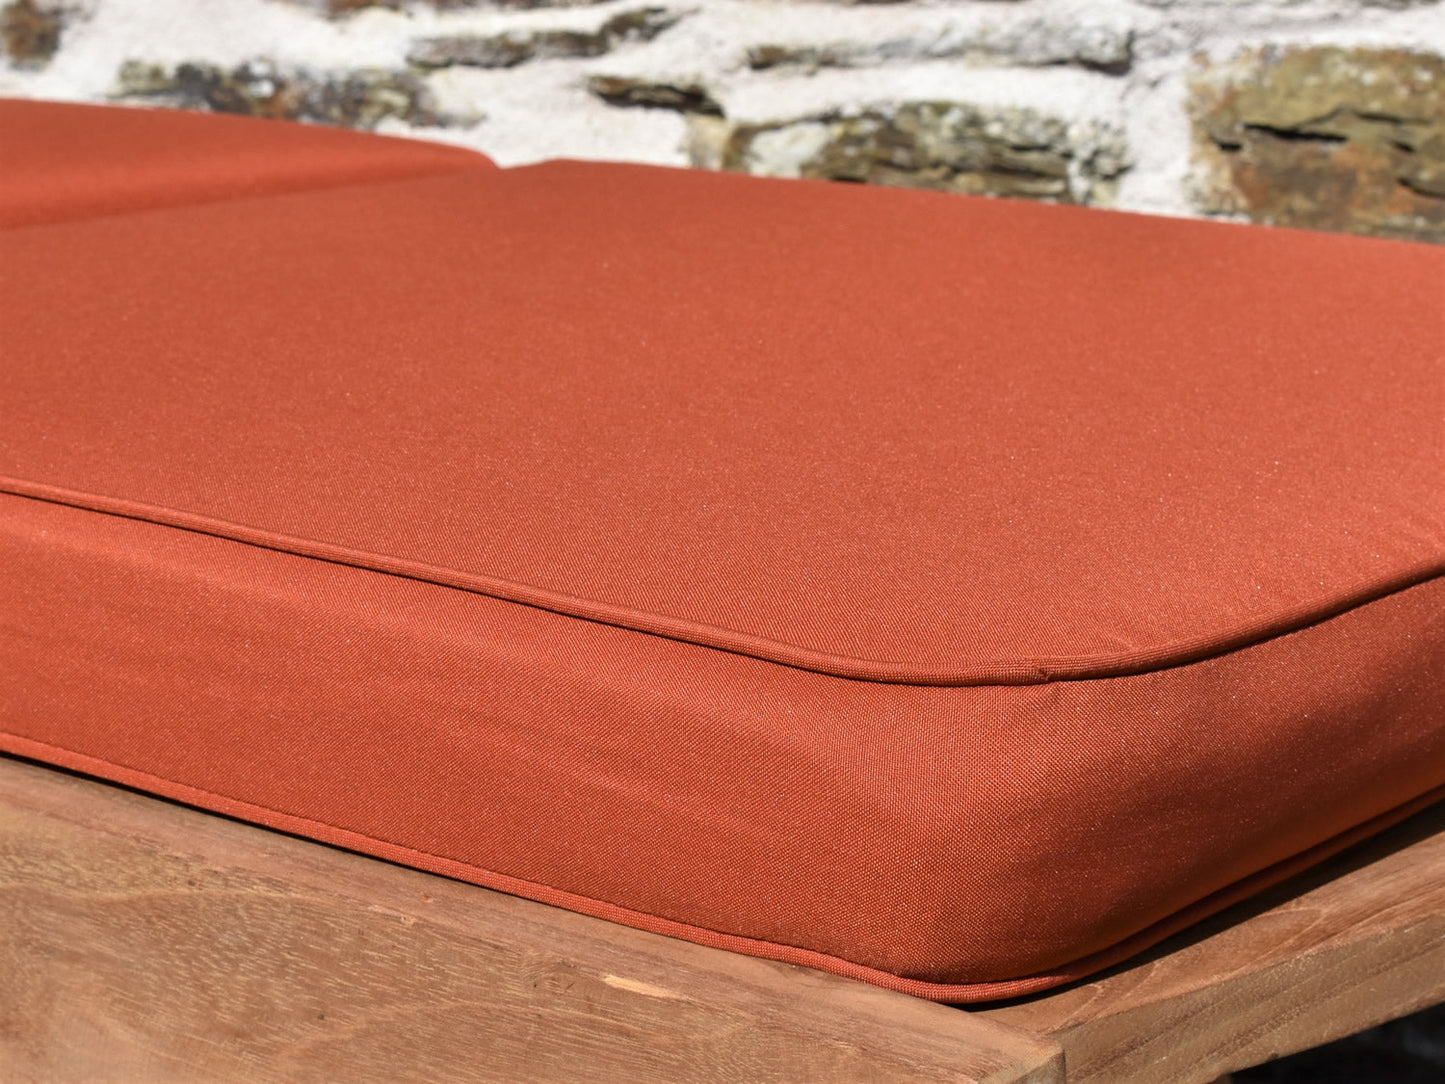 close-up detail of orange terracotta colour garden sunlounger cushion fabric